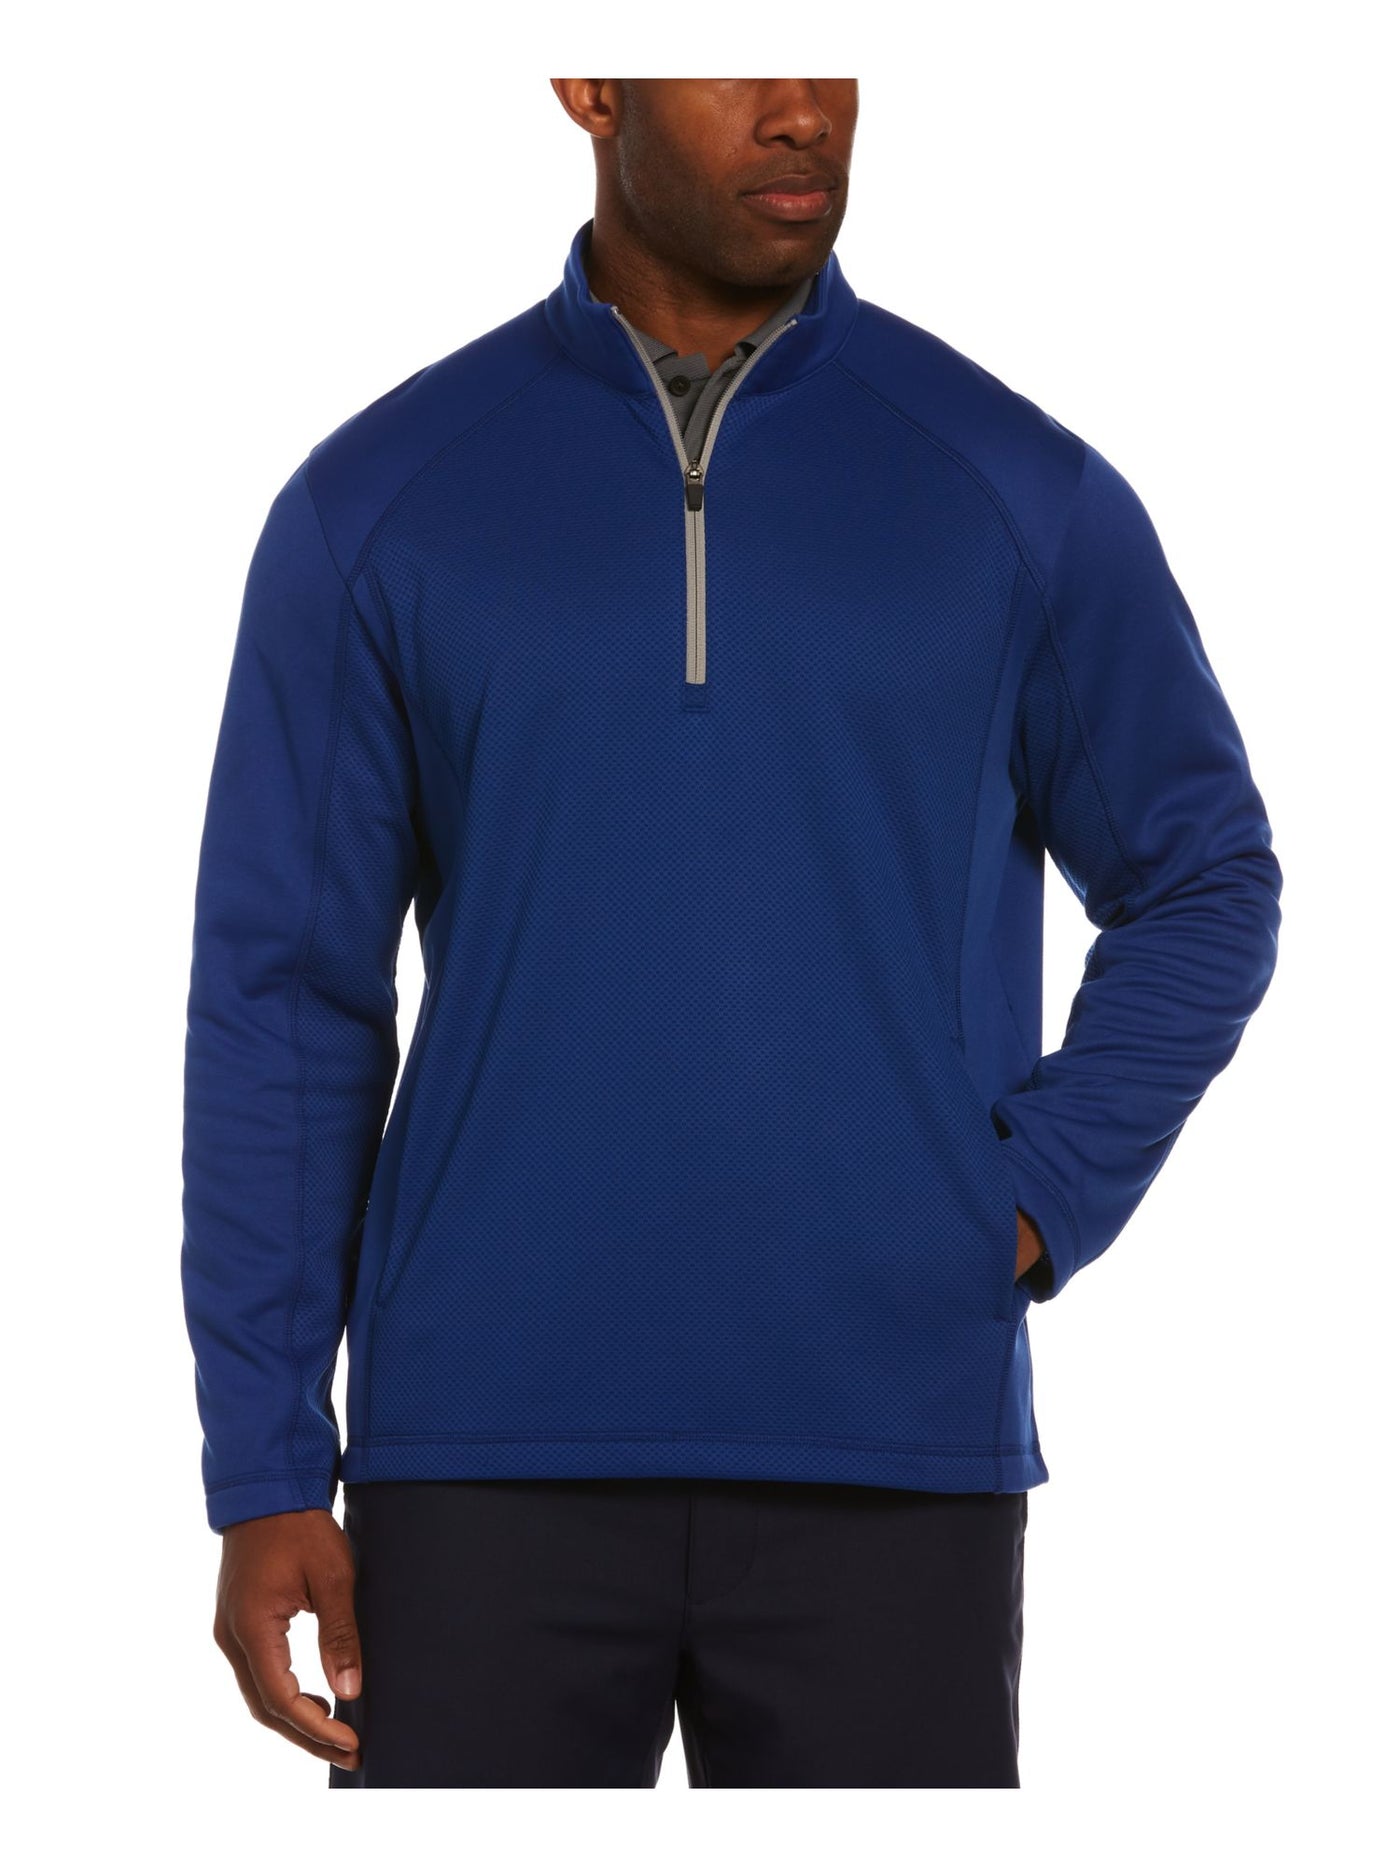 HYBRID APPAREL Mens Blue Mock Neck Quarter-Zip Pullover Sweater S